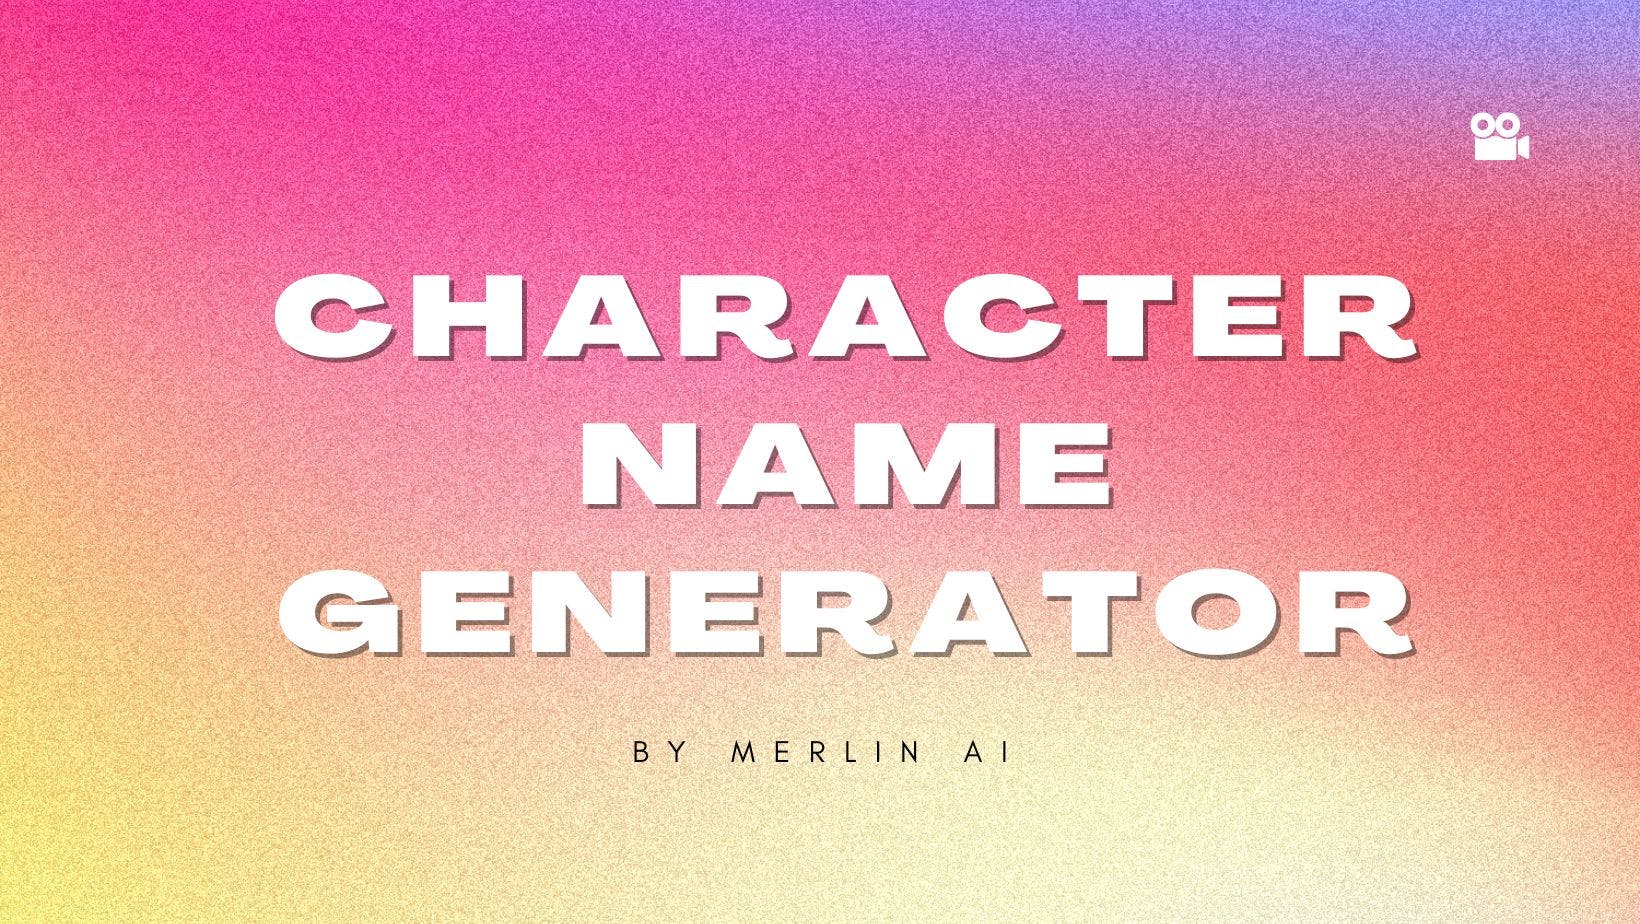 Cover Image for Kostenloser Charakternamen-Generator von Merlin AI